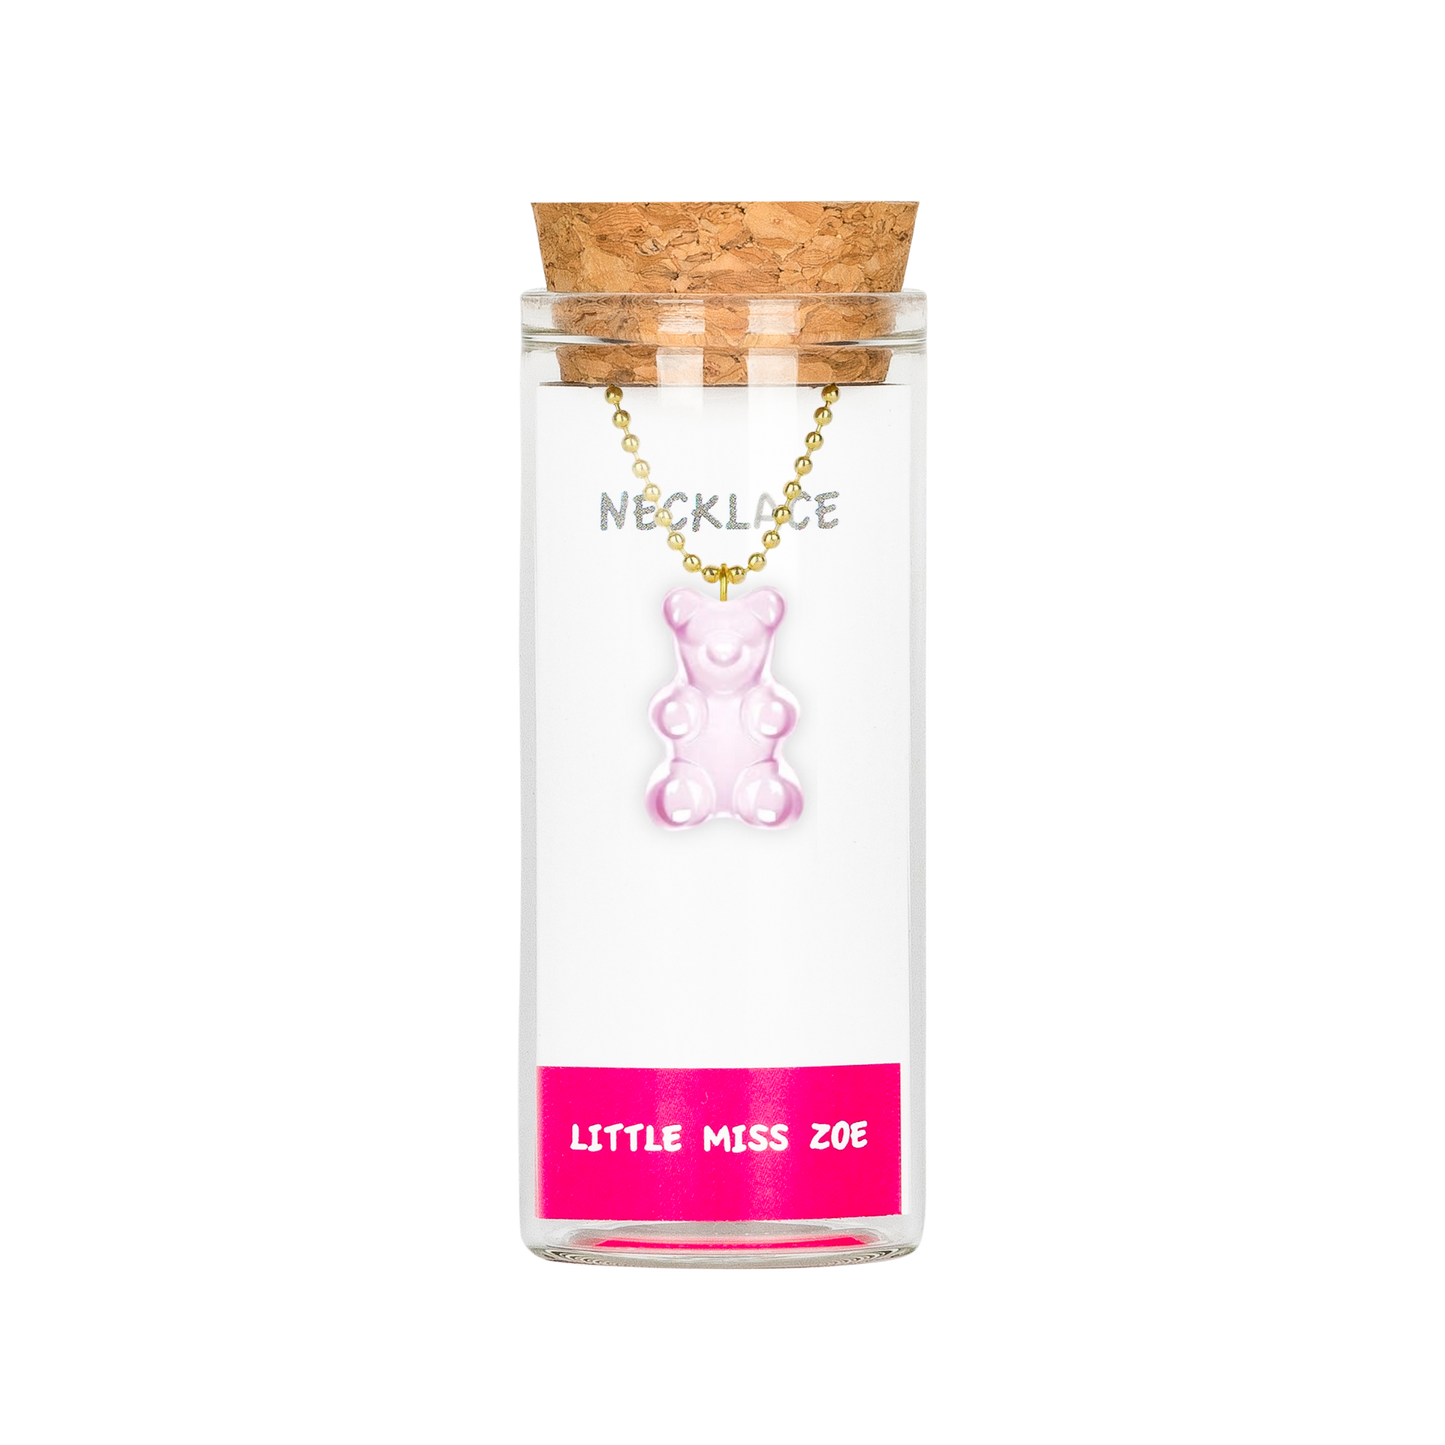 Pink Gummy Bear Necklace in a Bottle